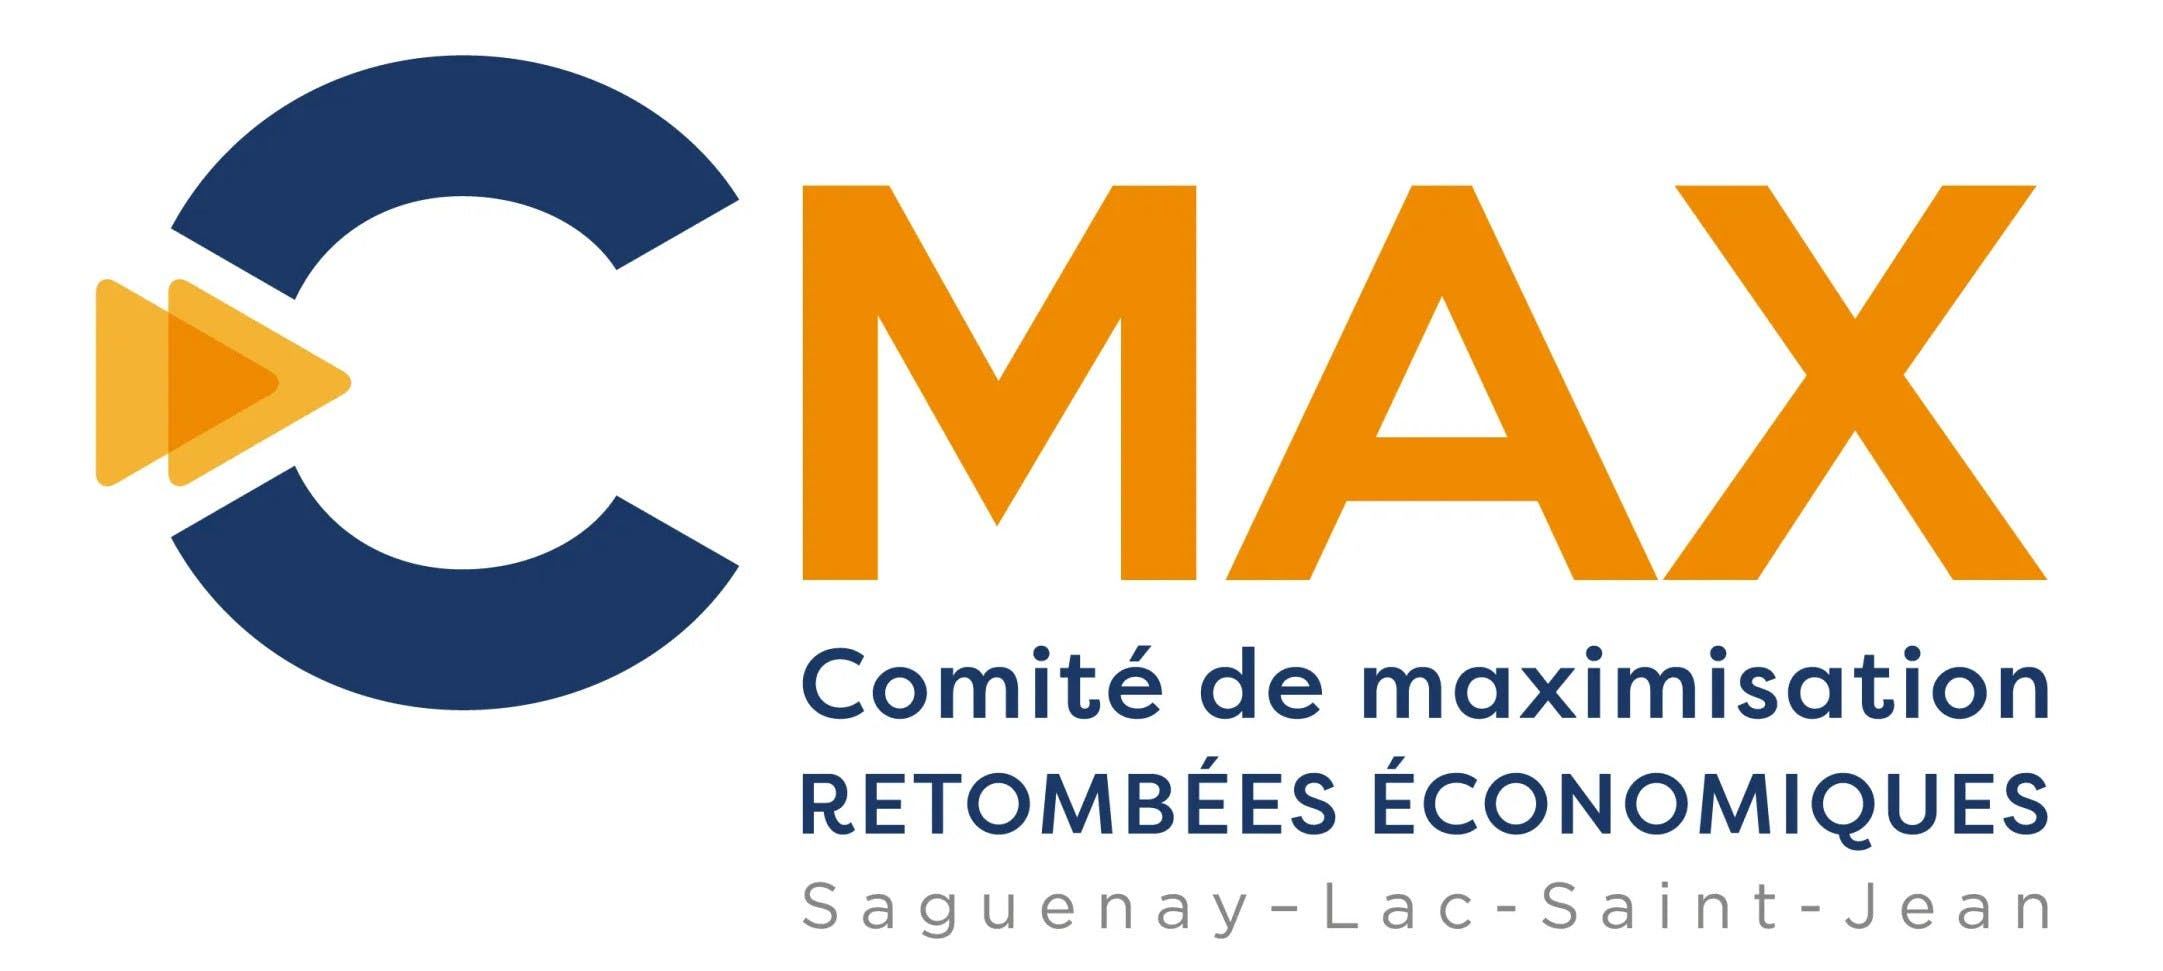 Regional Economic Impact Maximization Committee (CMAX) logo